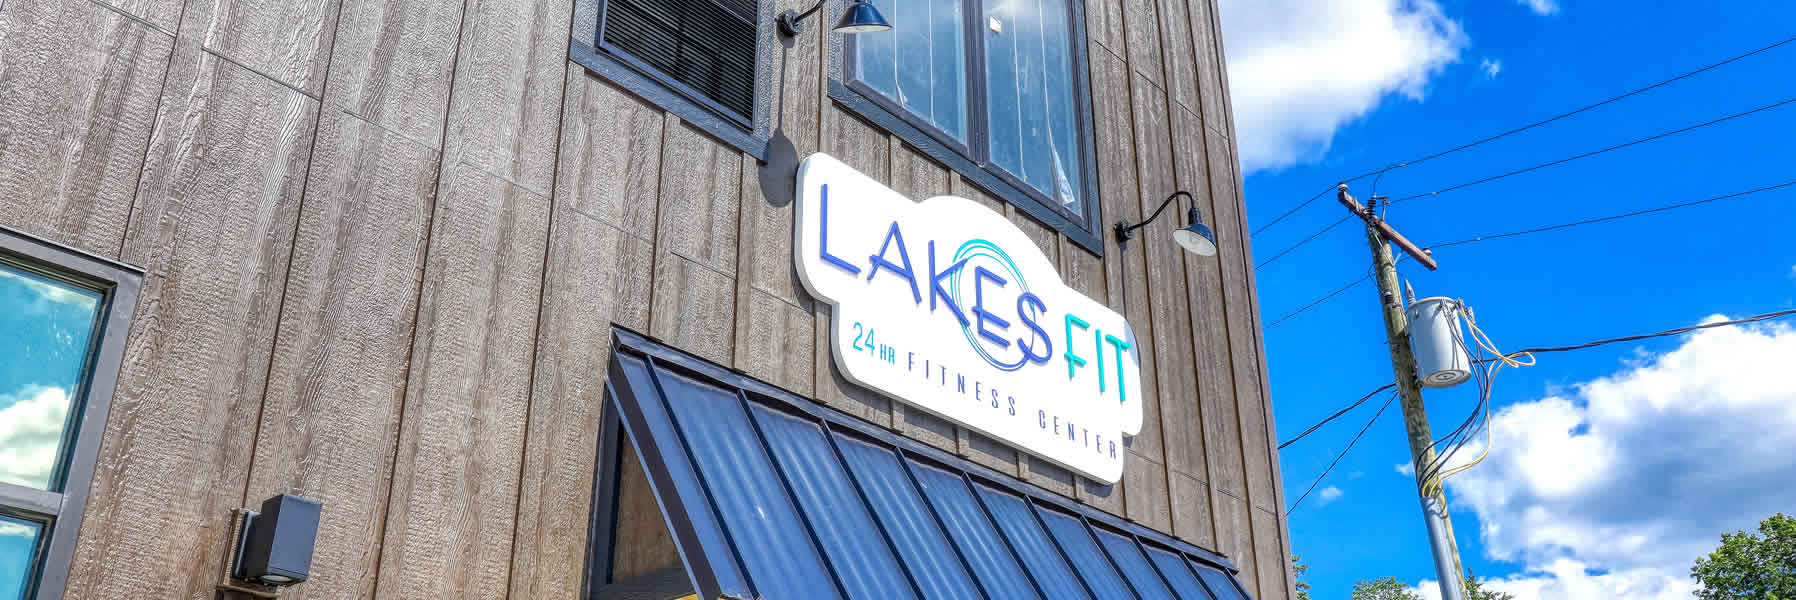 Lakes Fit, LLC - Banner